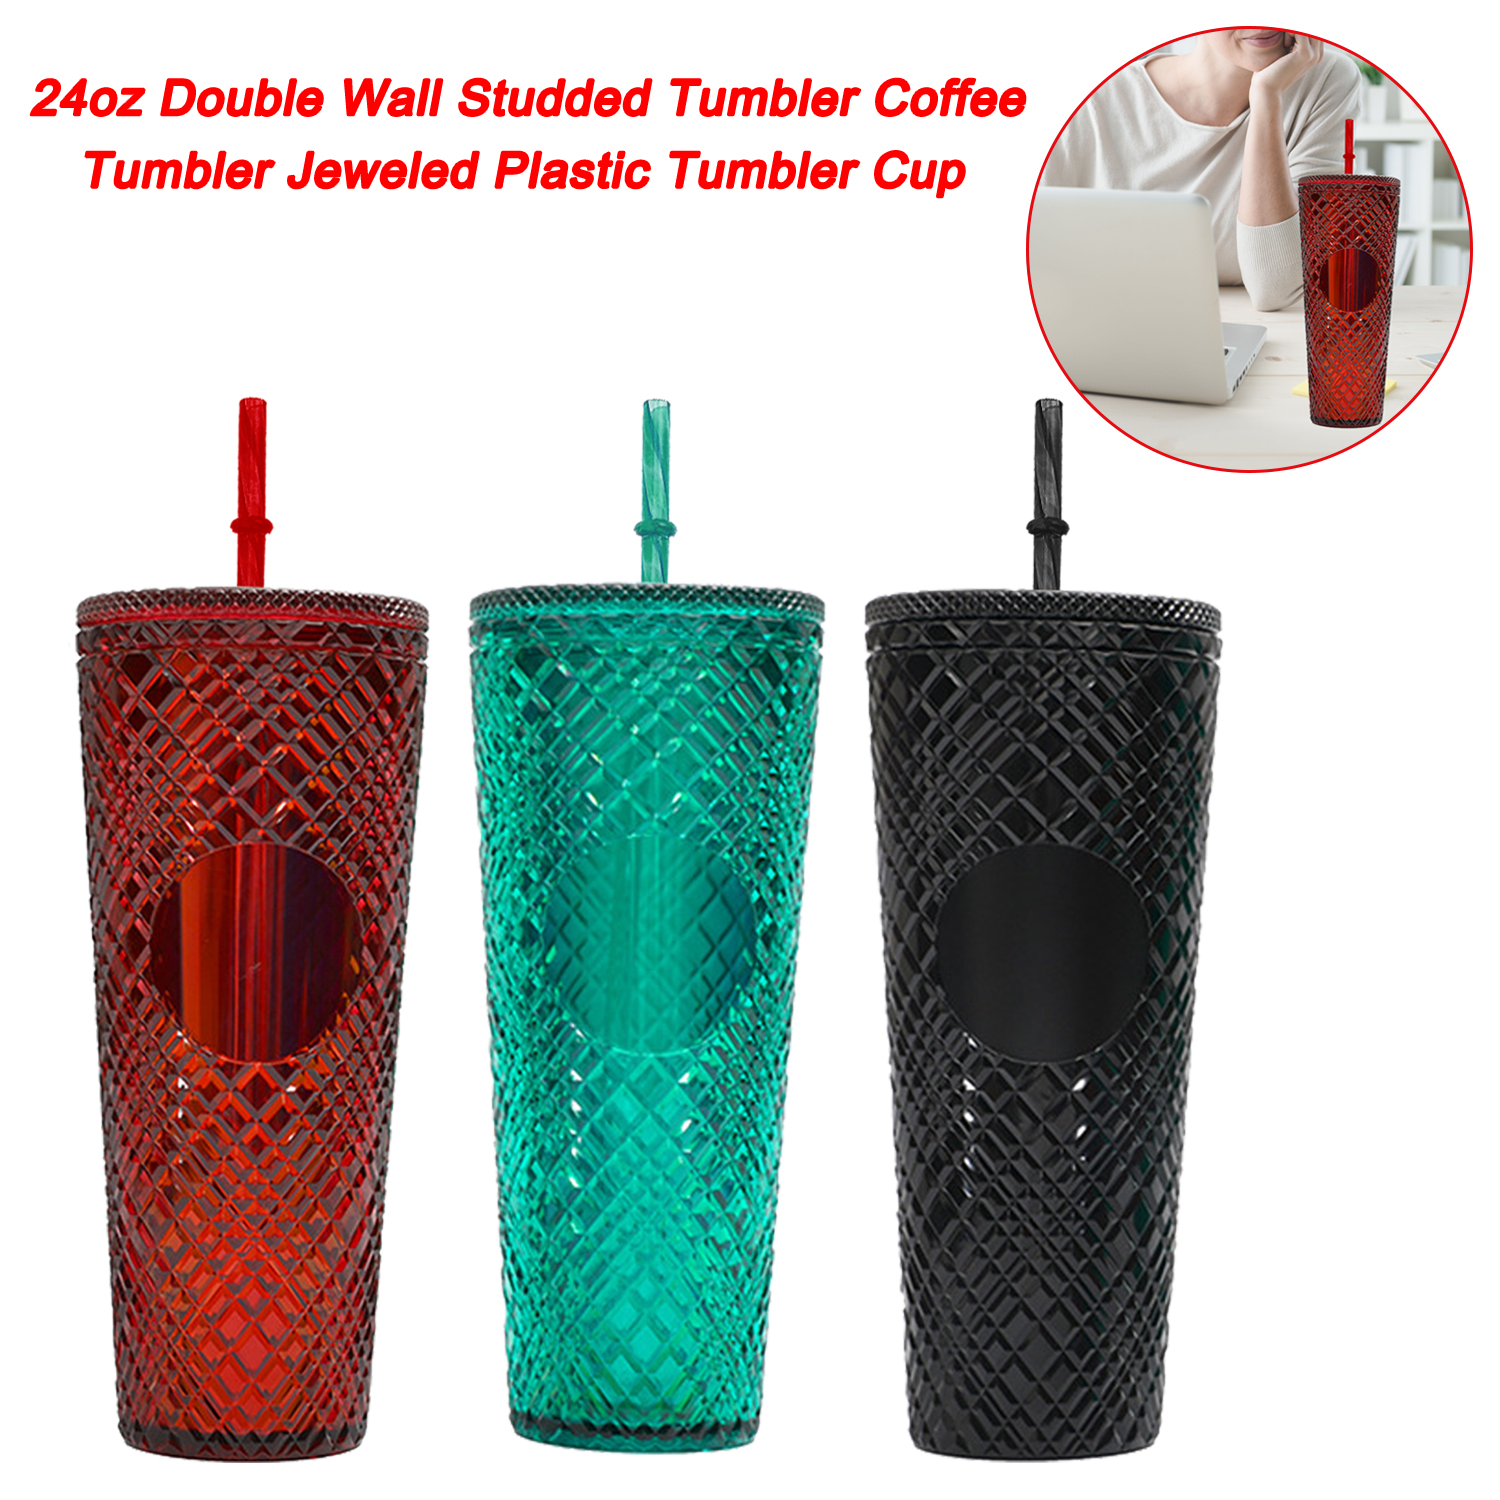 Taza plástica Jeweled del vaso de la taza de café tachonada de la pared doble 24OZ